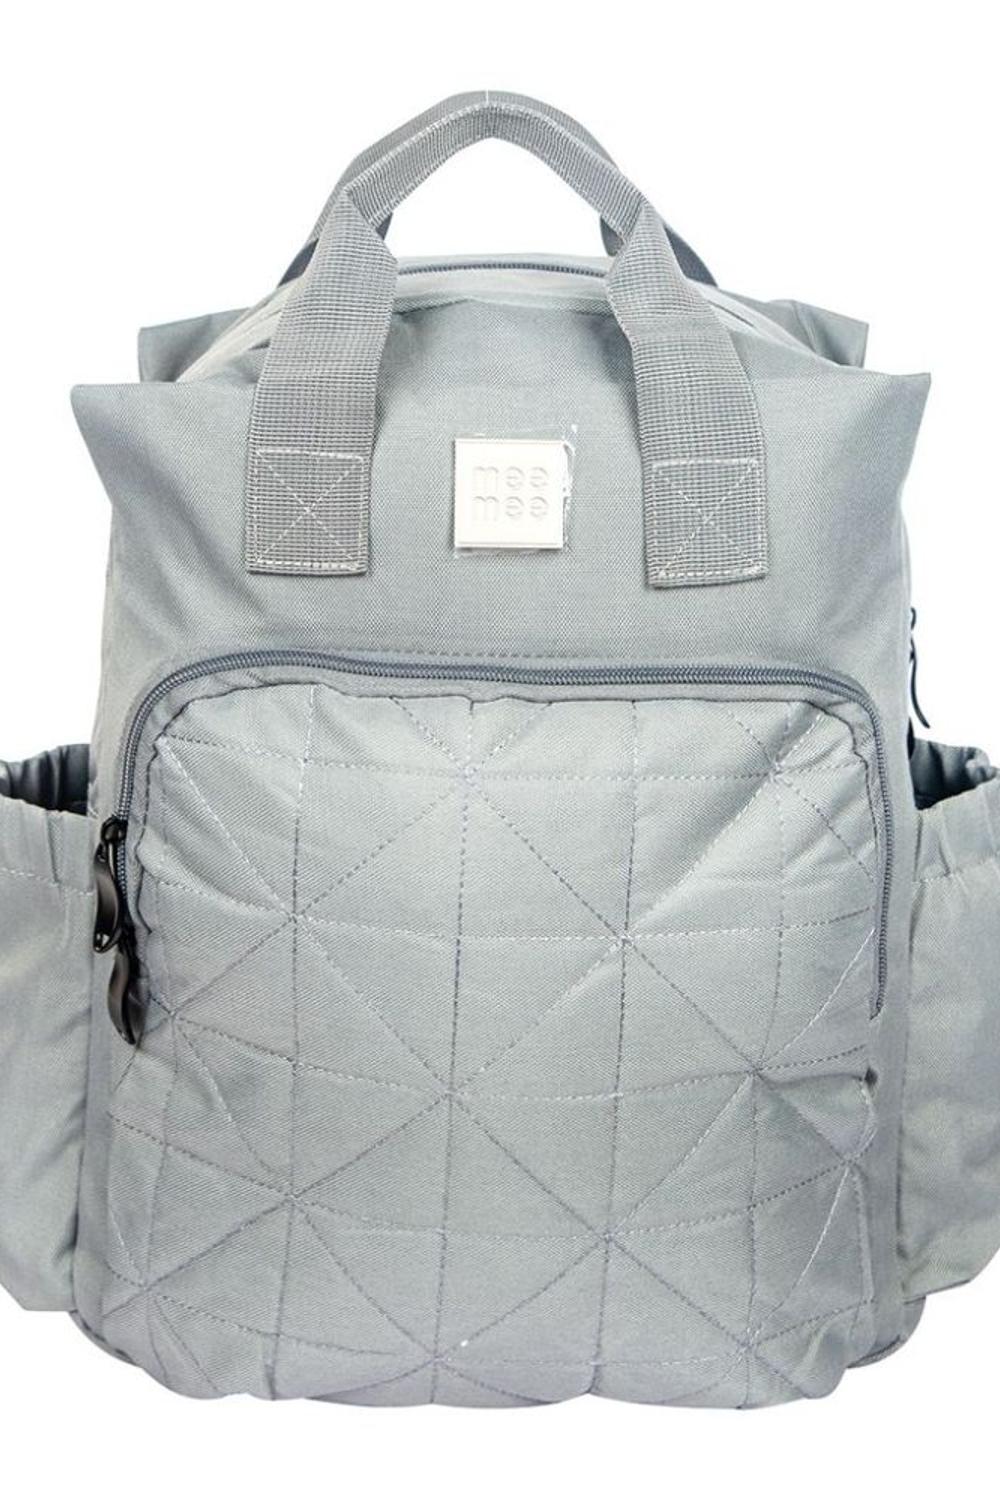 Mee Mee Multipurpose Diaper Bag/ Mamas Bag with Multiple Pockets & Bottle Warmer